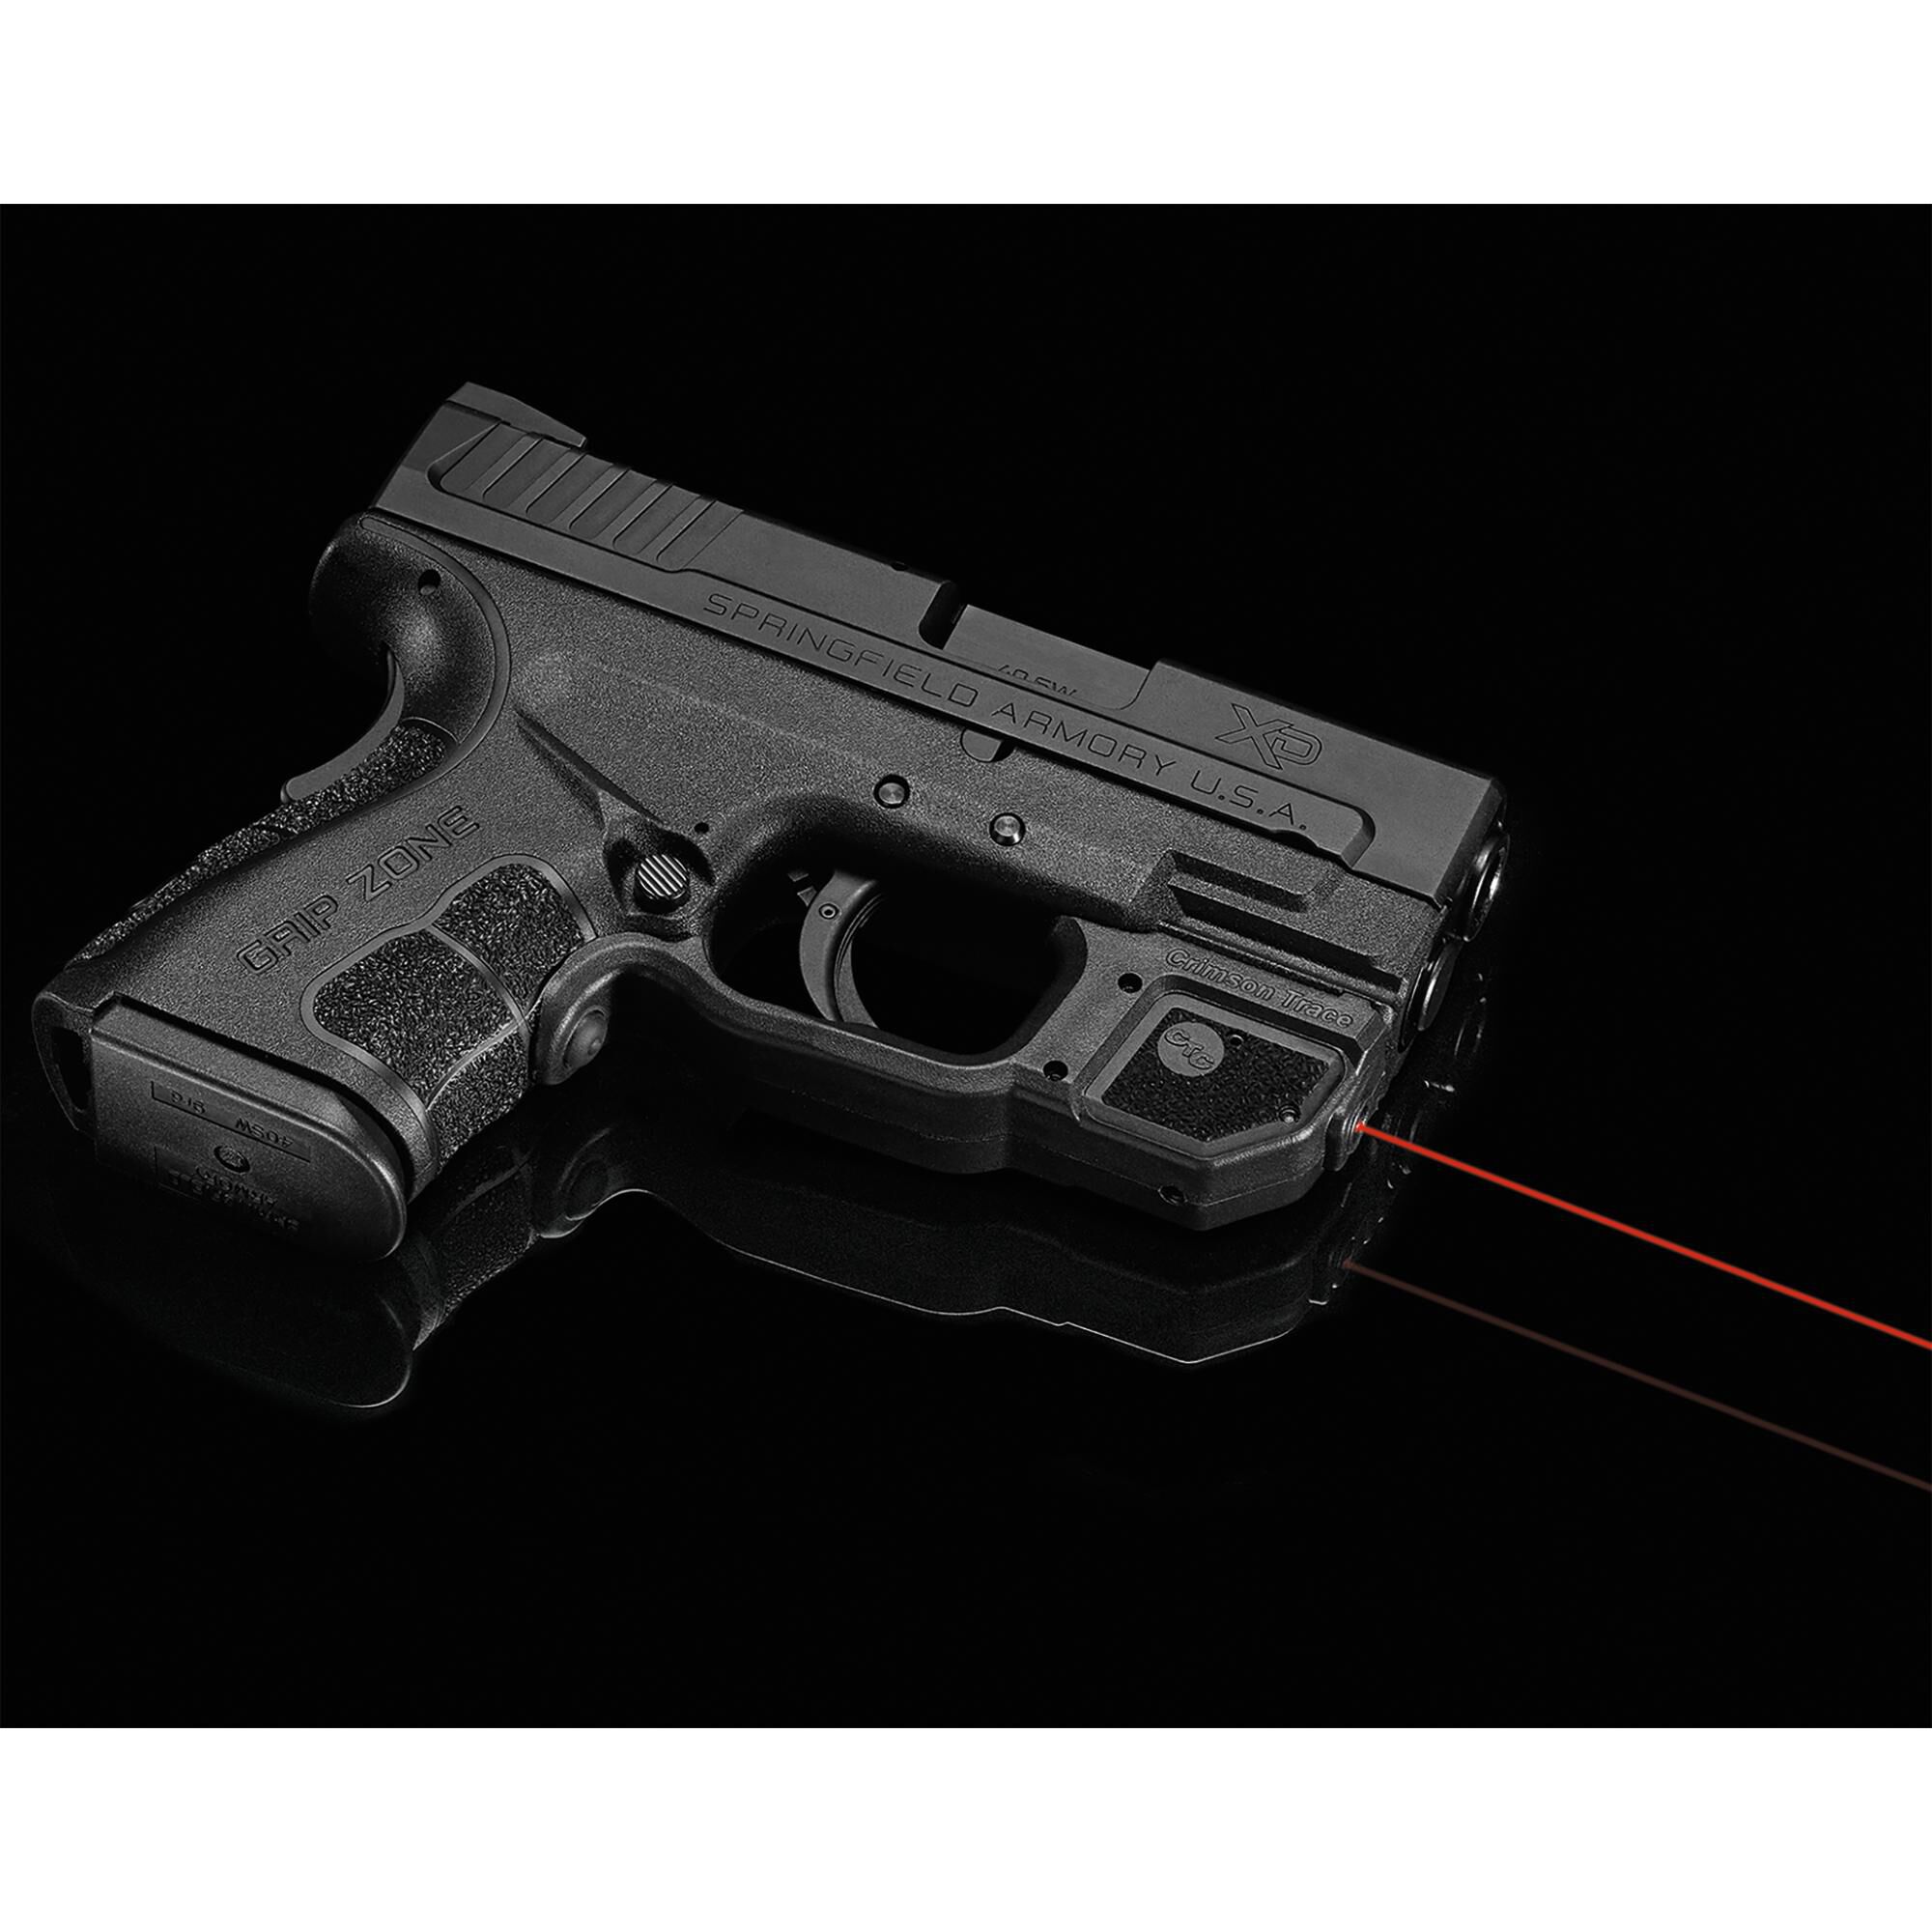 Crimson Trace Corporation Laserguard Springfield XD Mod 2 Cmtlg496 for sale online 